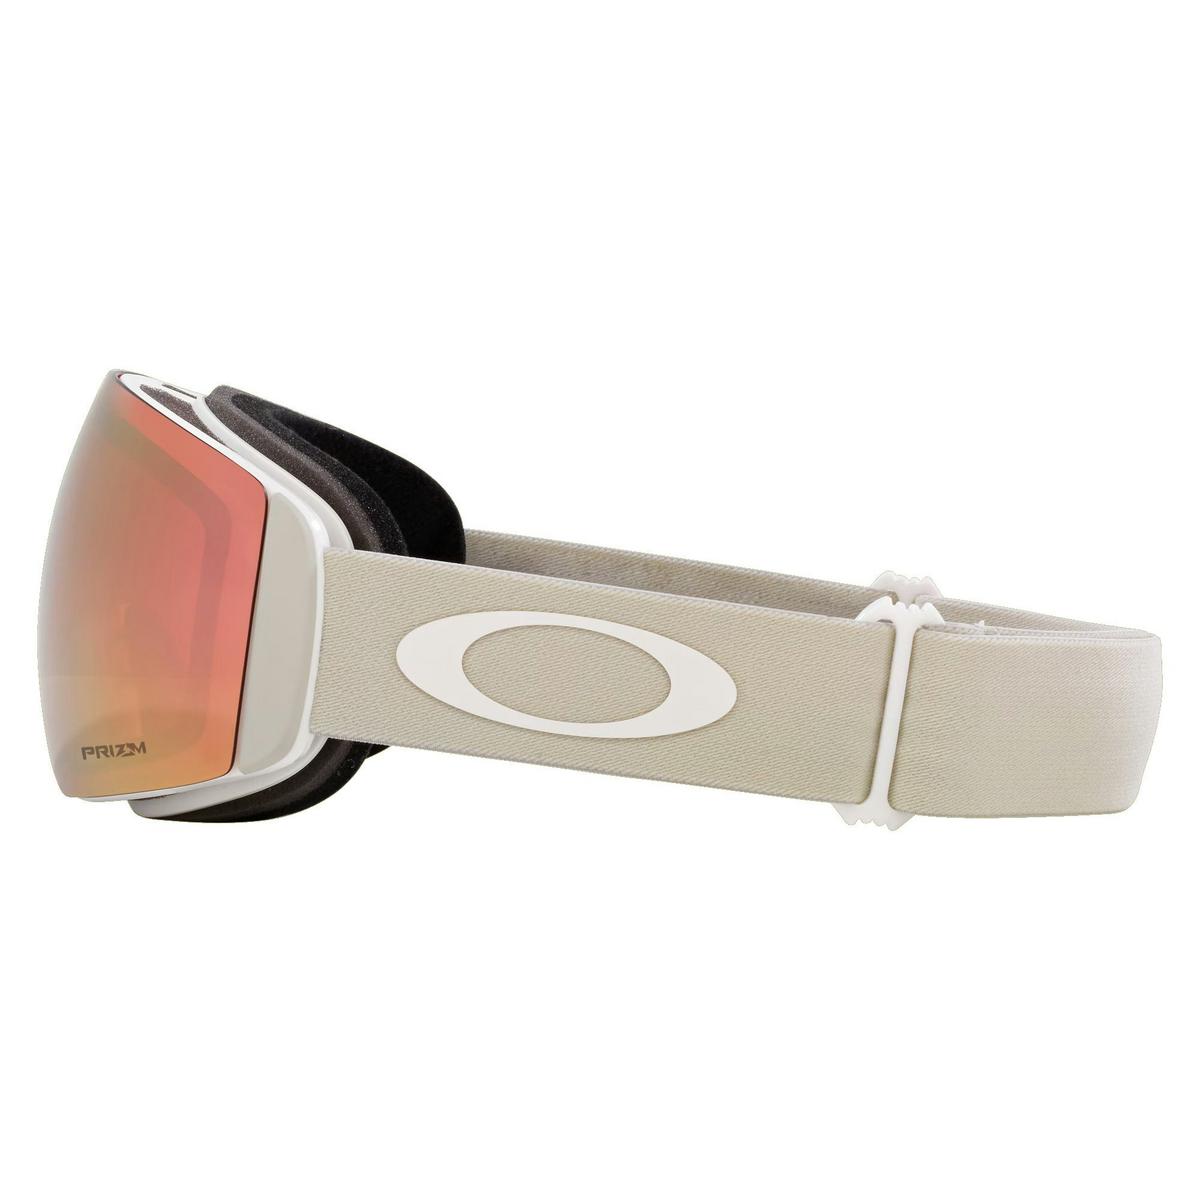 Oakley Flight Deck M Goggles - Cool Grey / Prizm Rose